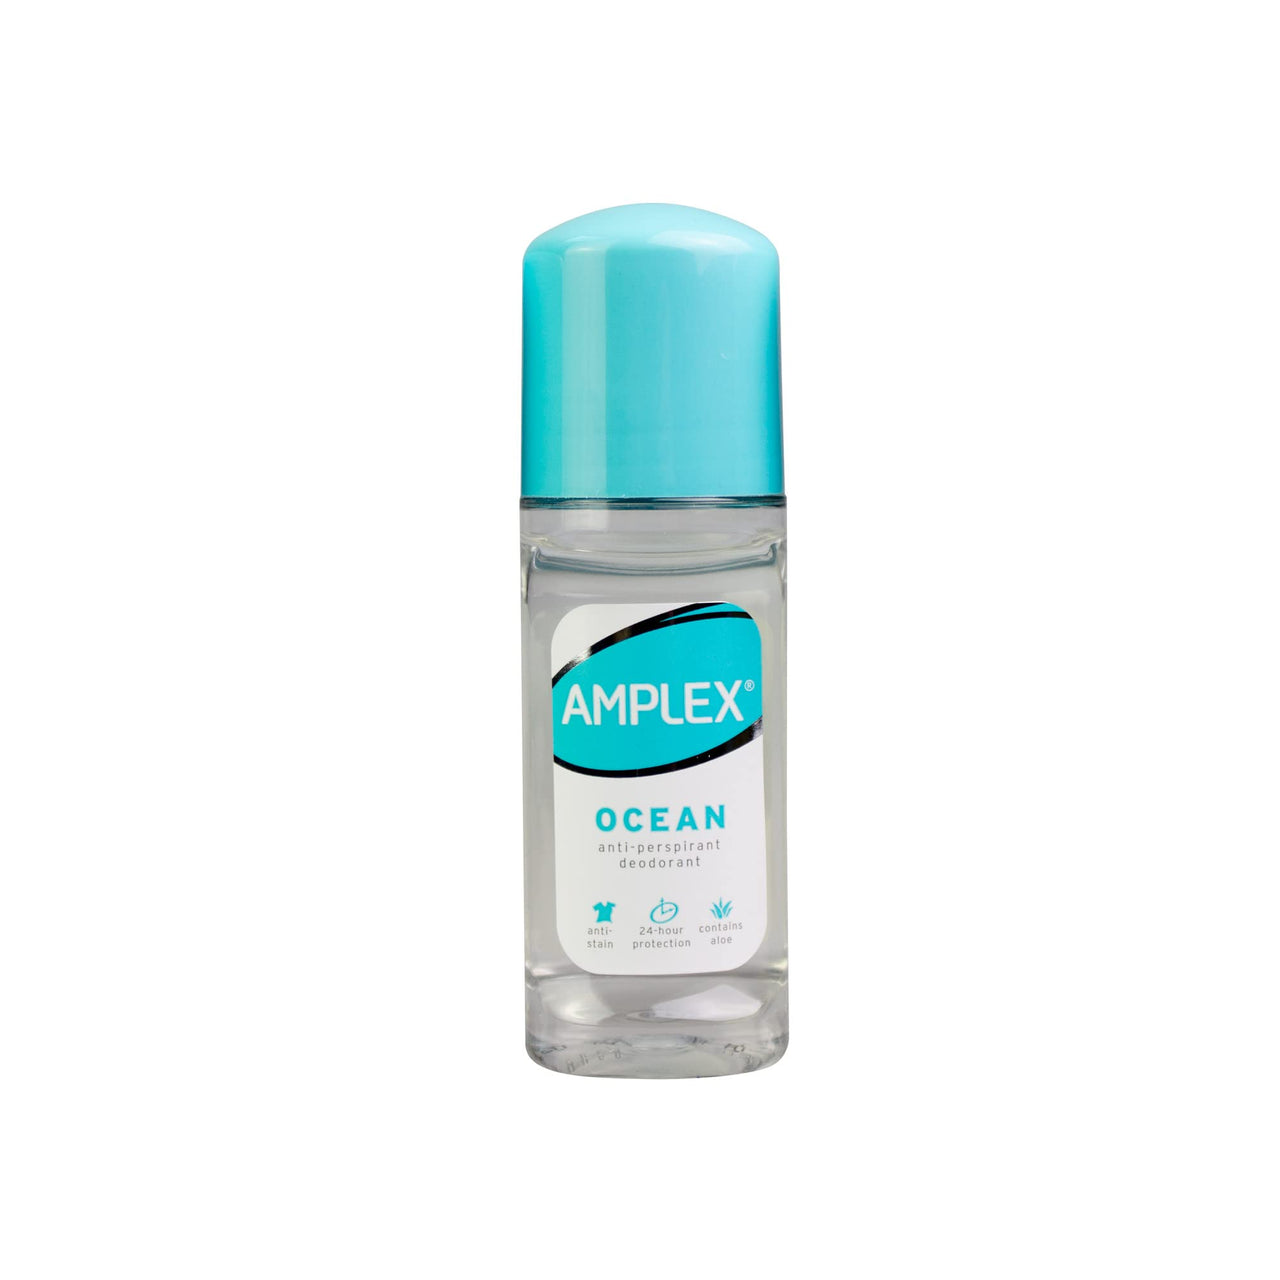 Amplex Antiperspirant Deodorant Roll On (Ocean) - 50ml - sassydeals.co.uk